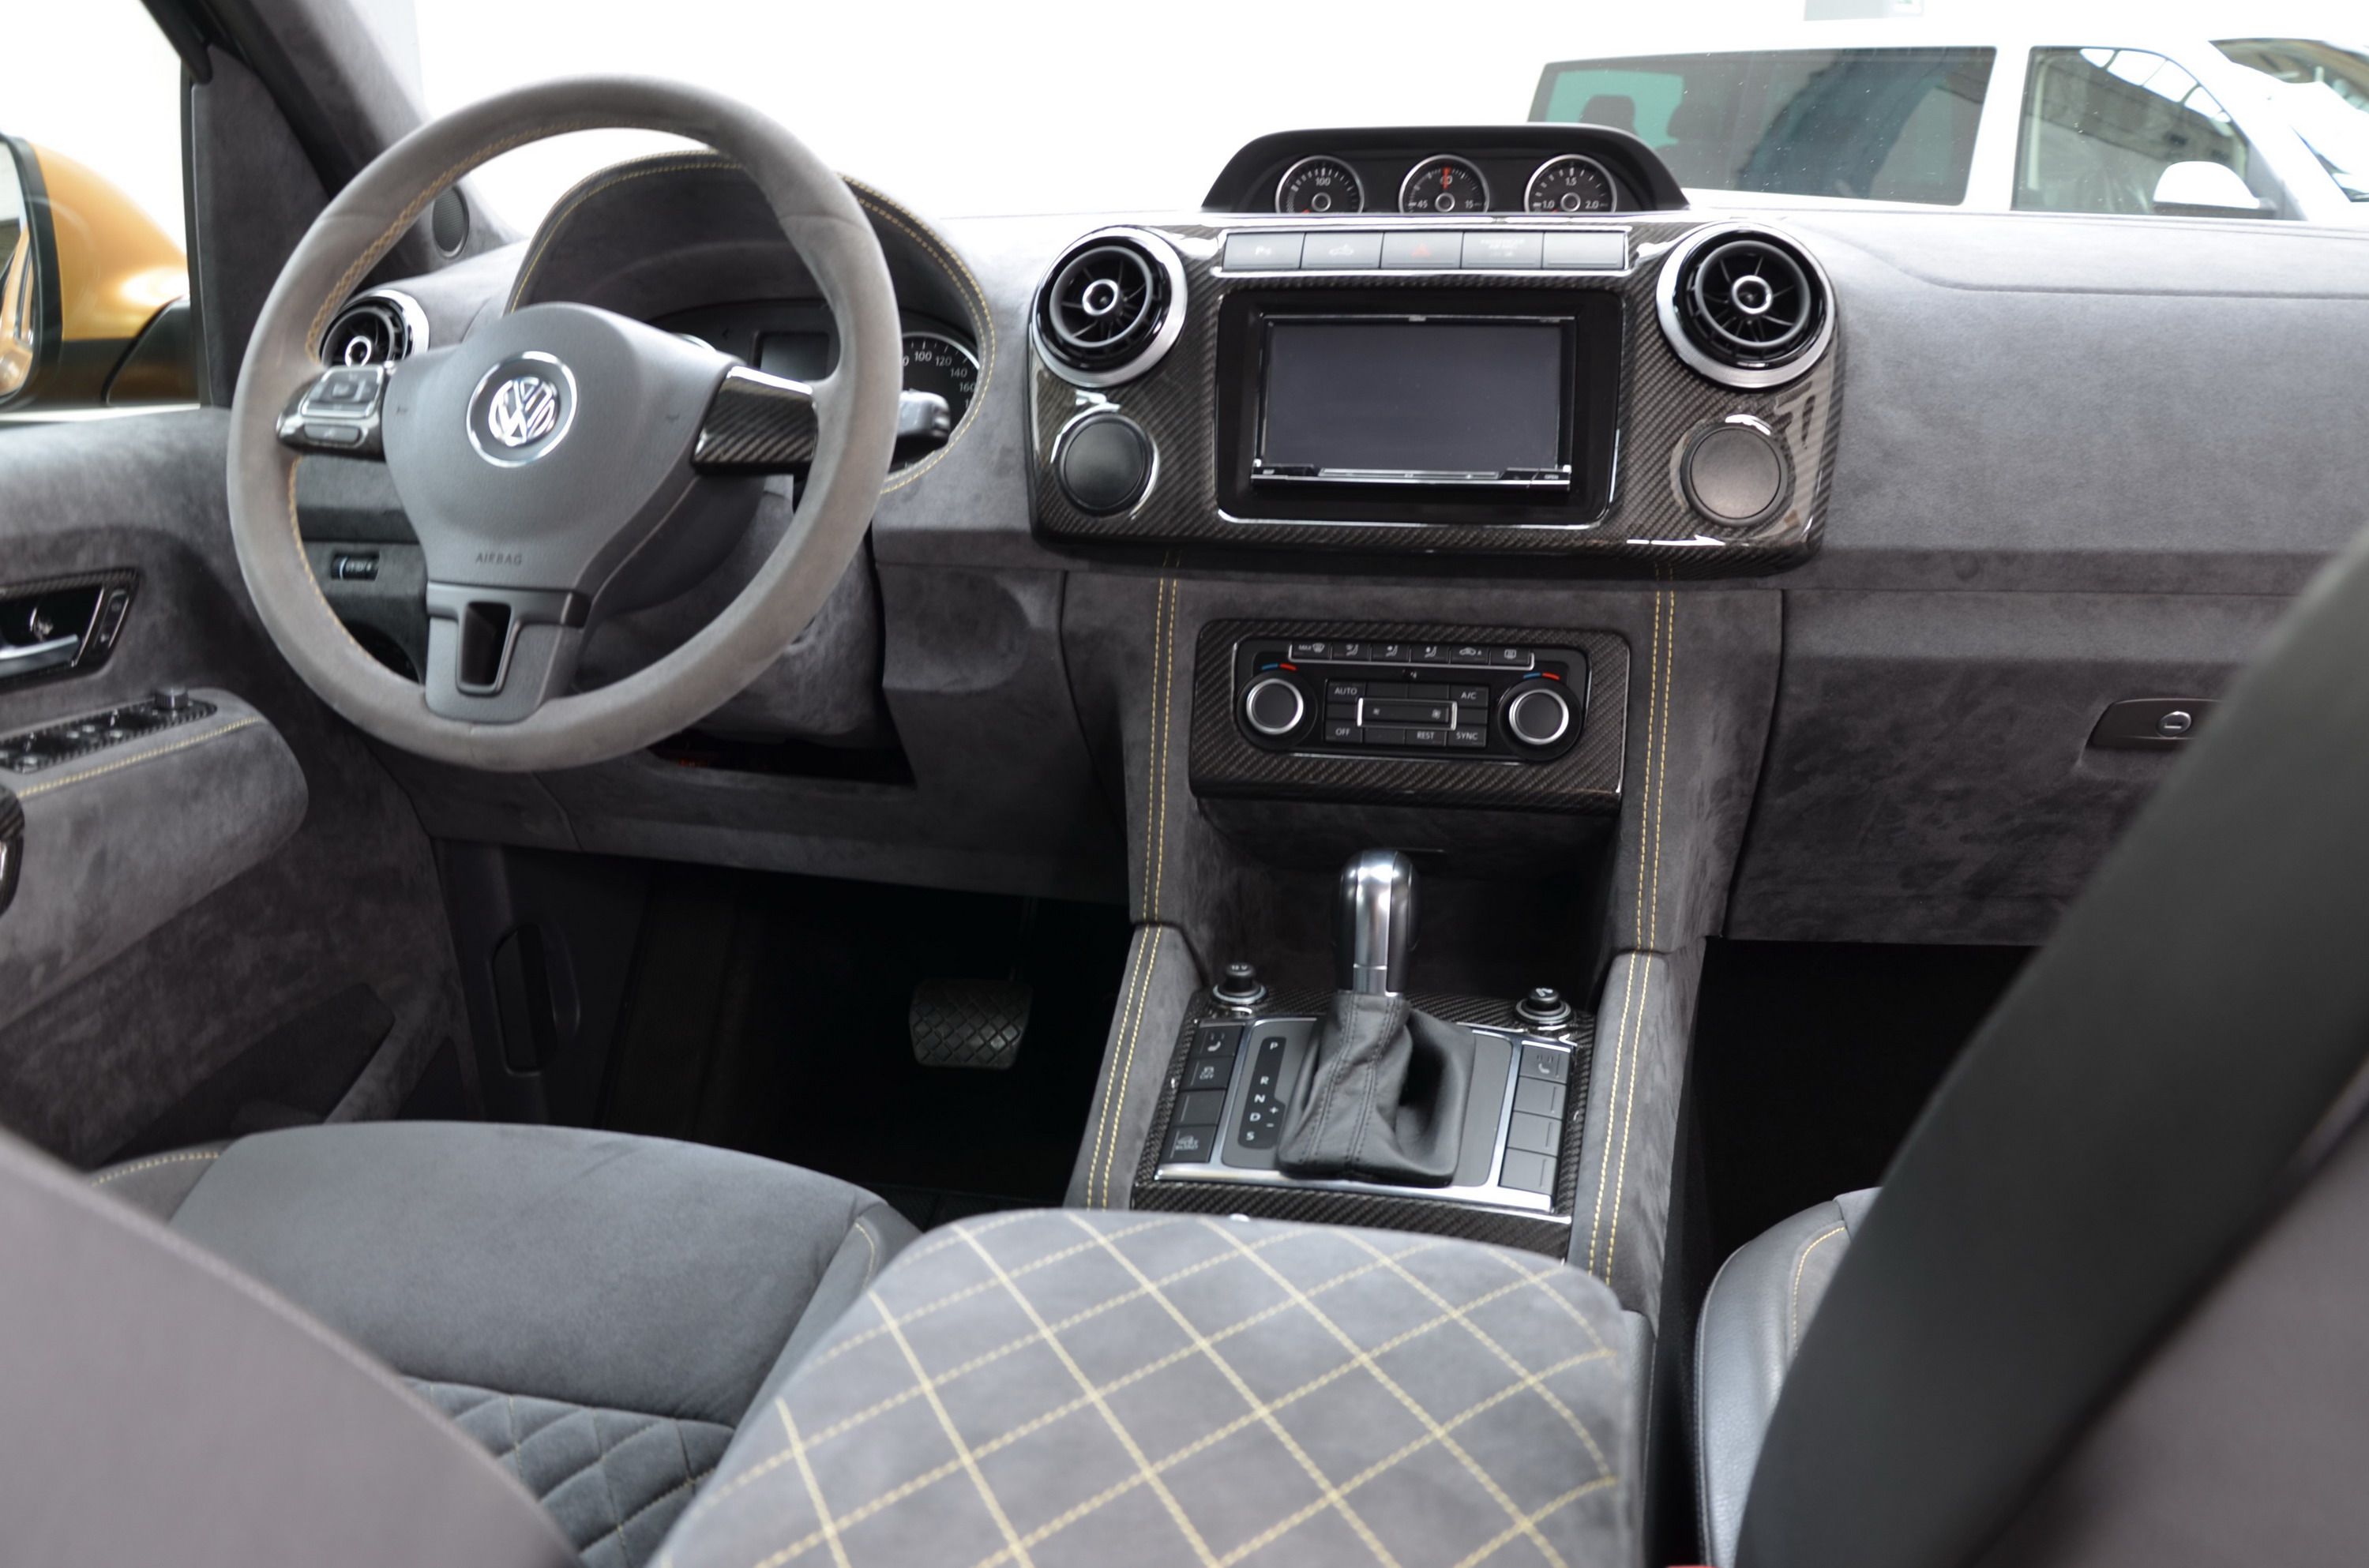 2016 Volkswagen Amarok V8 Desert Edition by MTM